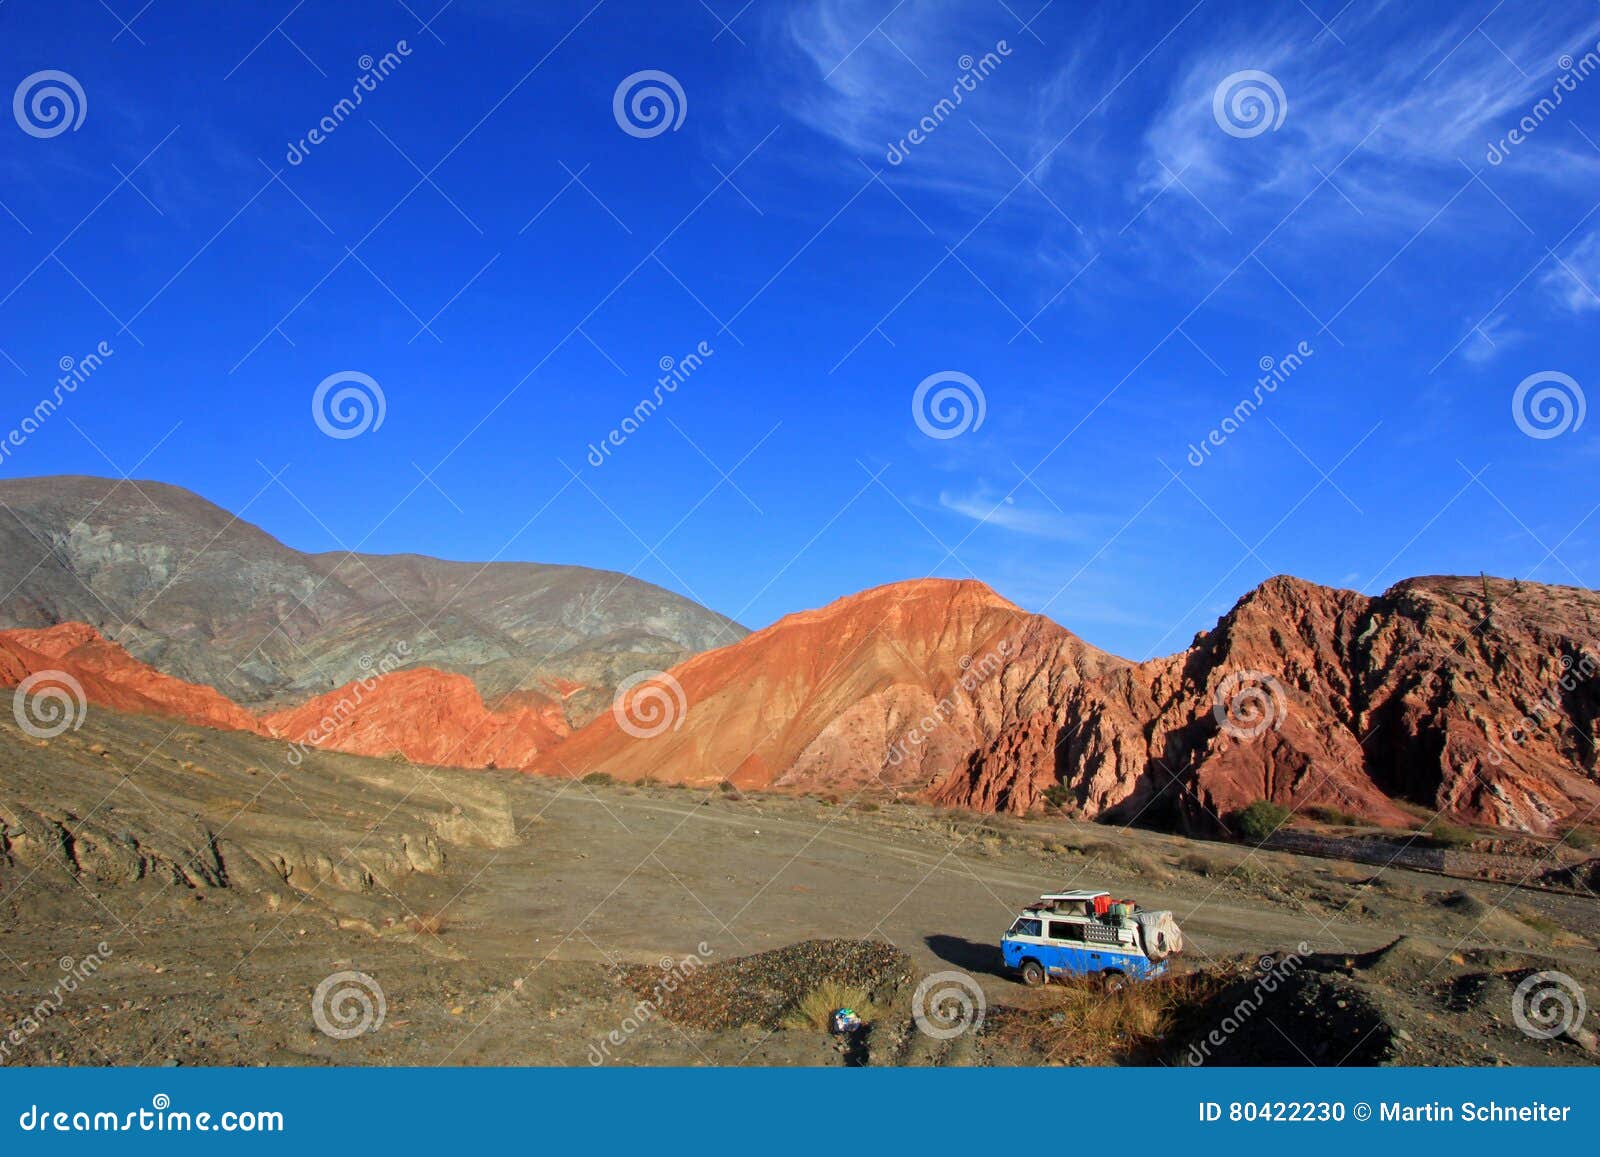 van on the hill of seven colors, cerro de los siete colores, at purmamarca, jujuy, argentina